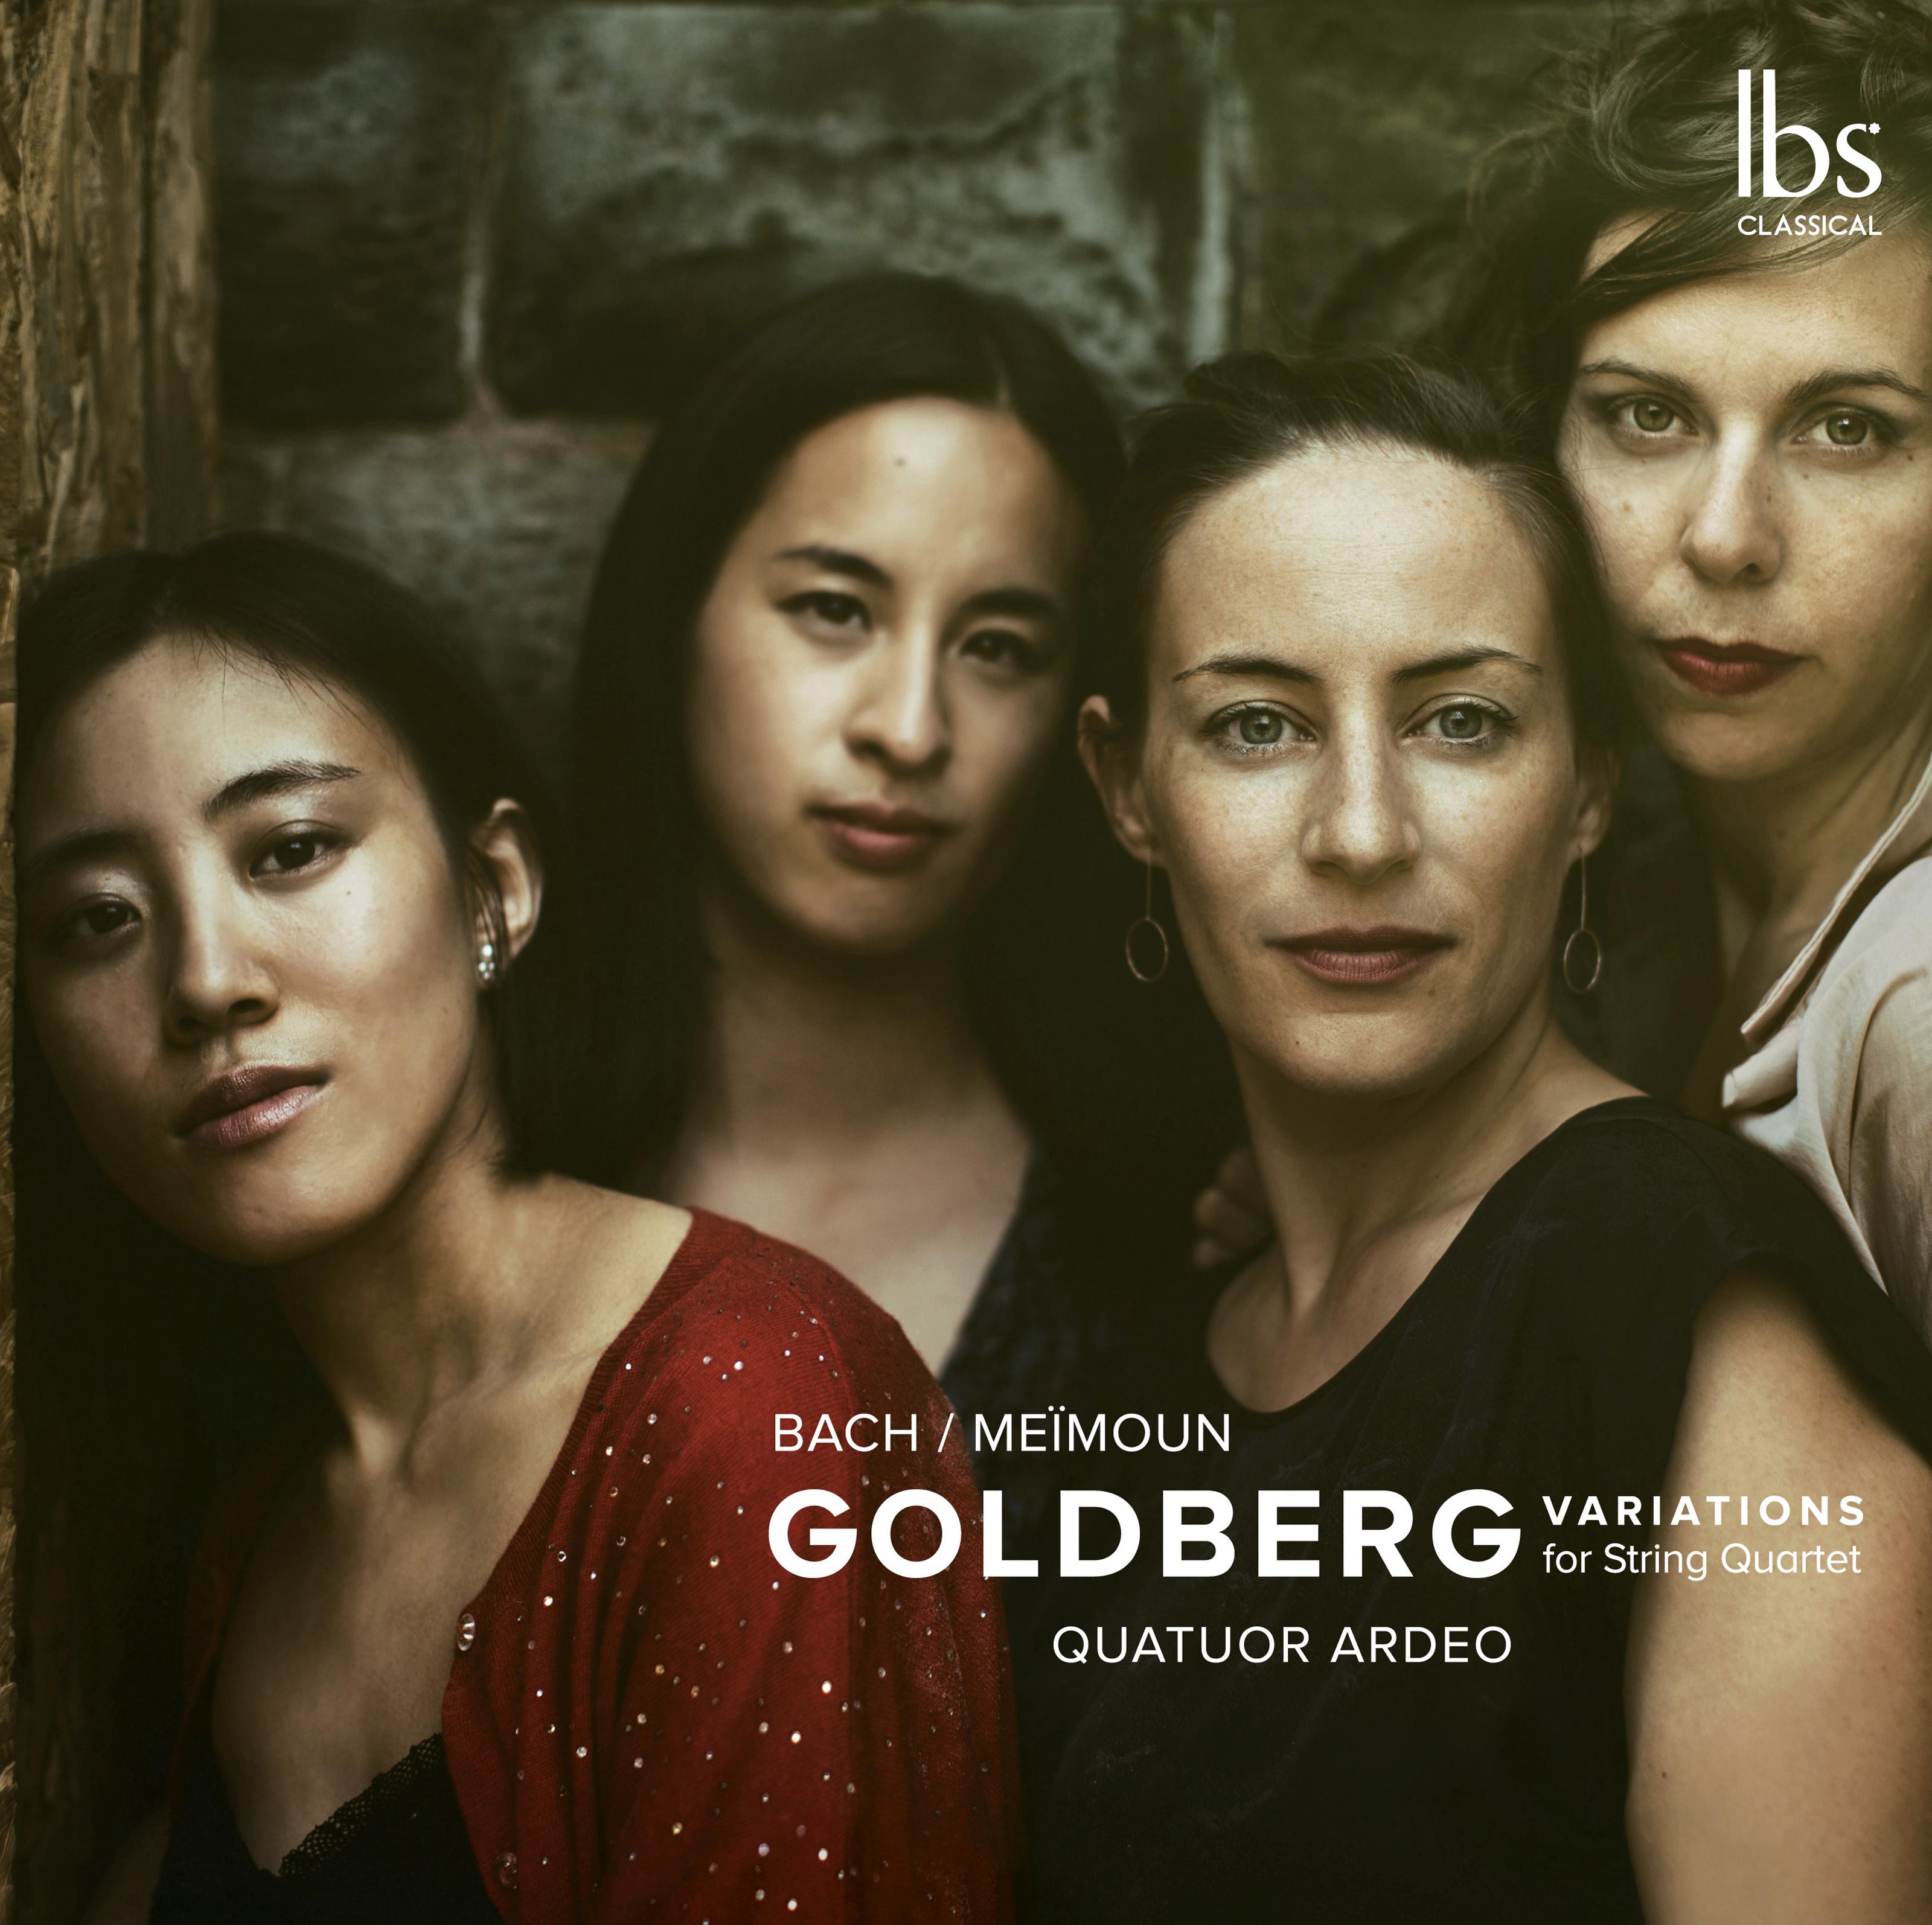 Goldberg Variations, BWV 988 Arr. F. Me moun for String Quartet: Var. 3, Canone all' unisuono